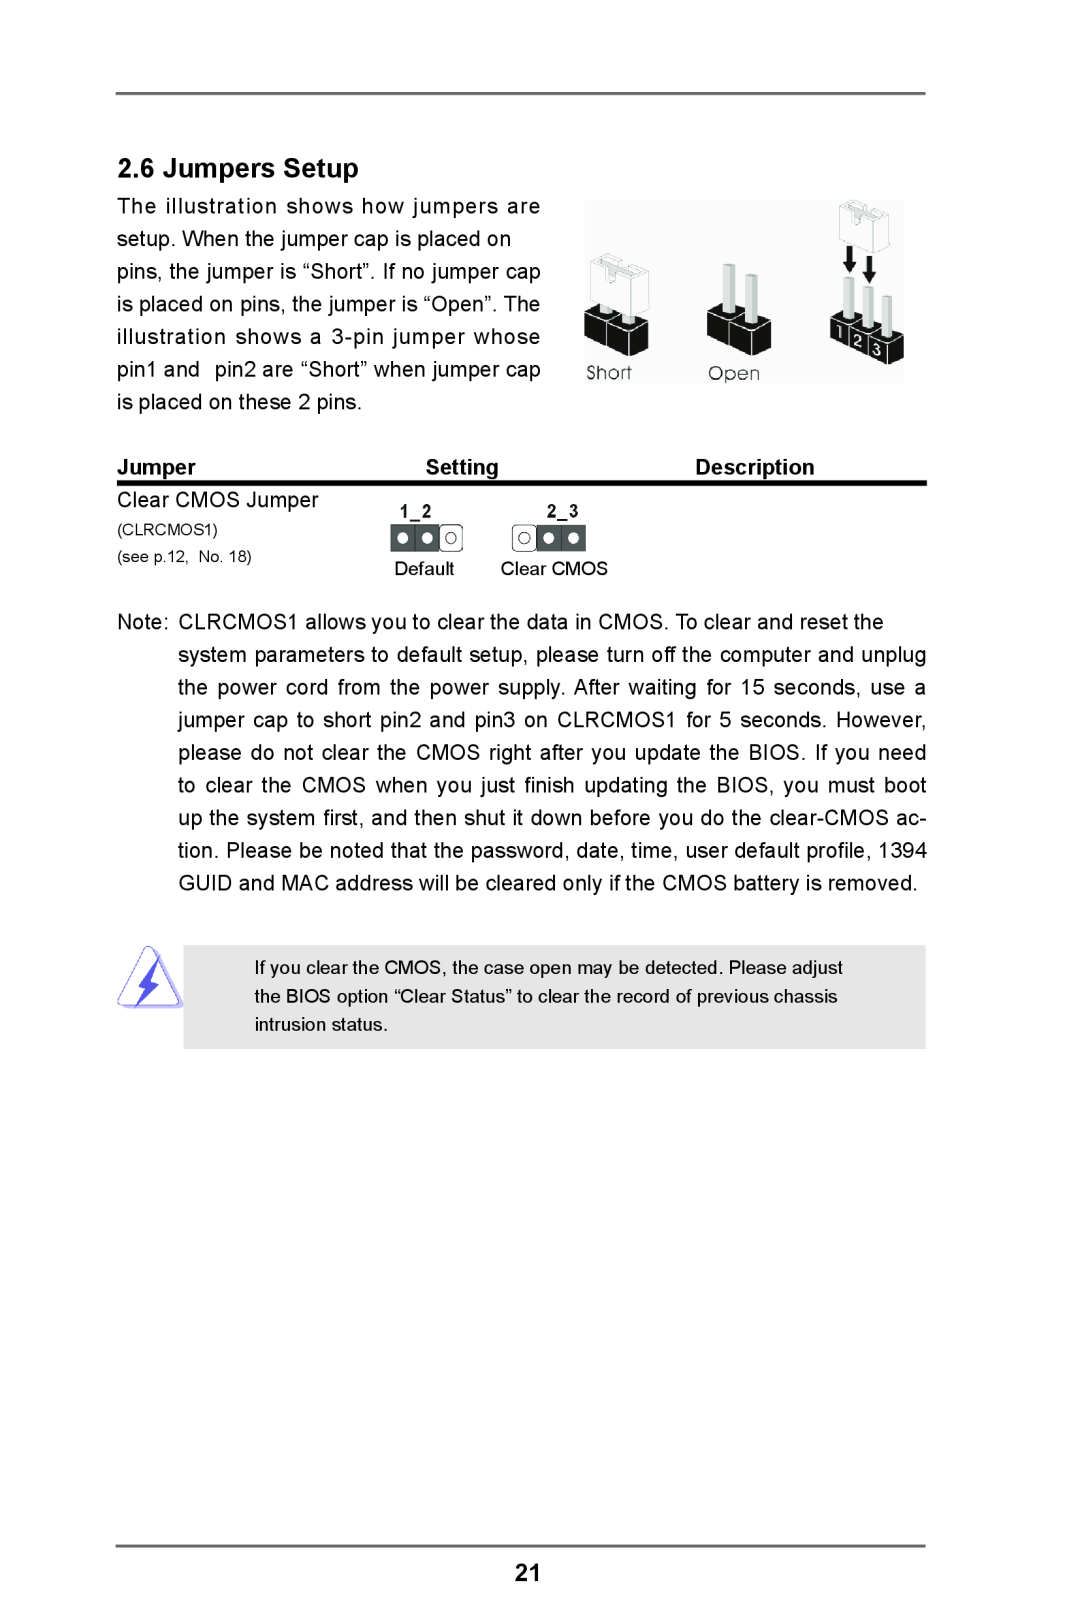 ASRock 960GM-VGS3 FX manual Jumpers Setup, Description 